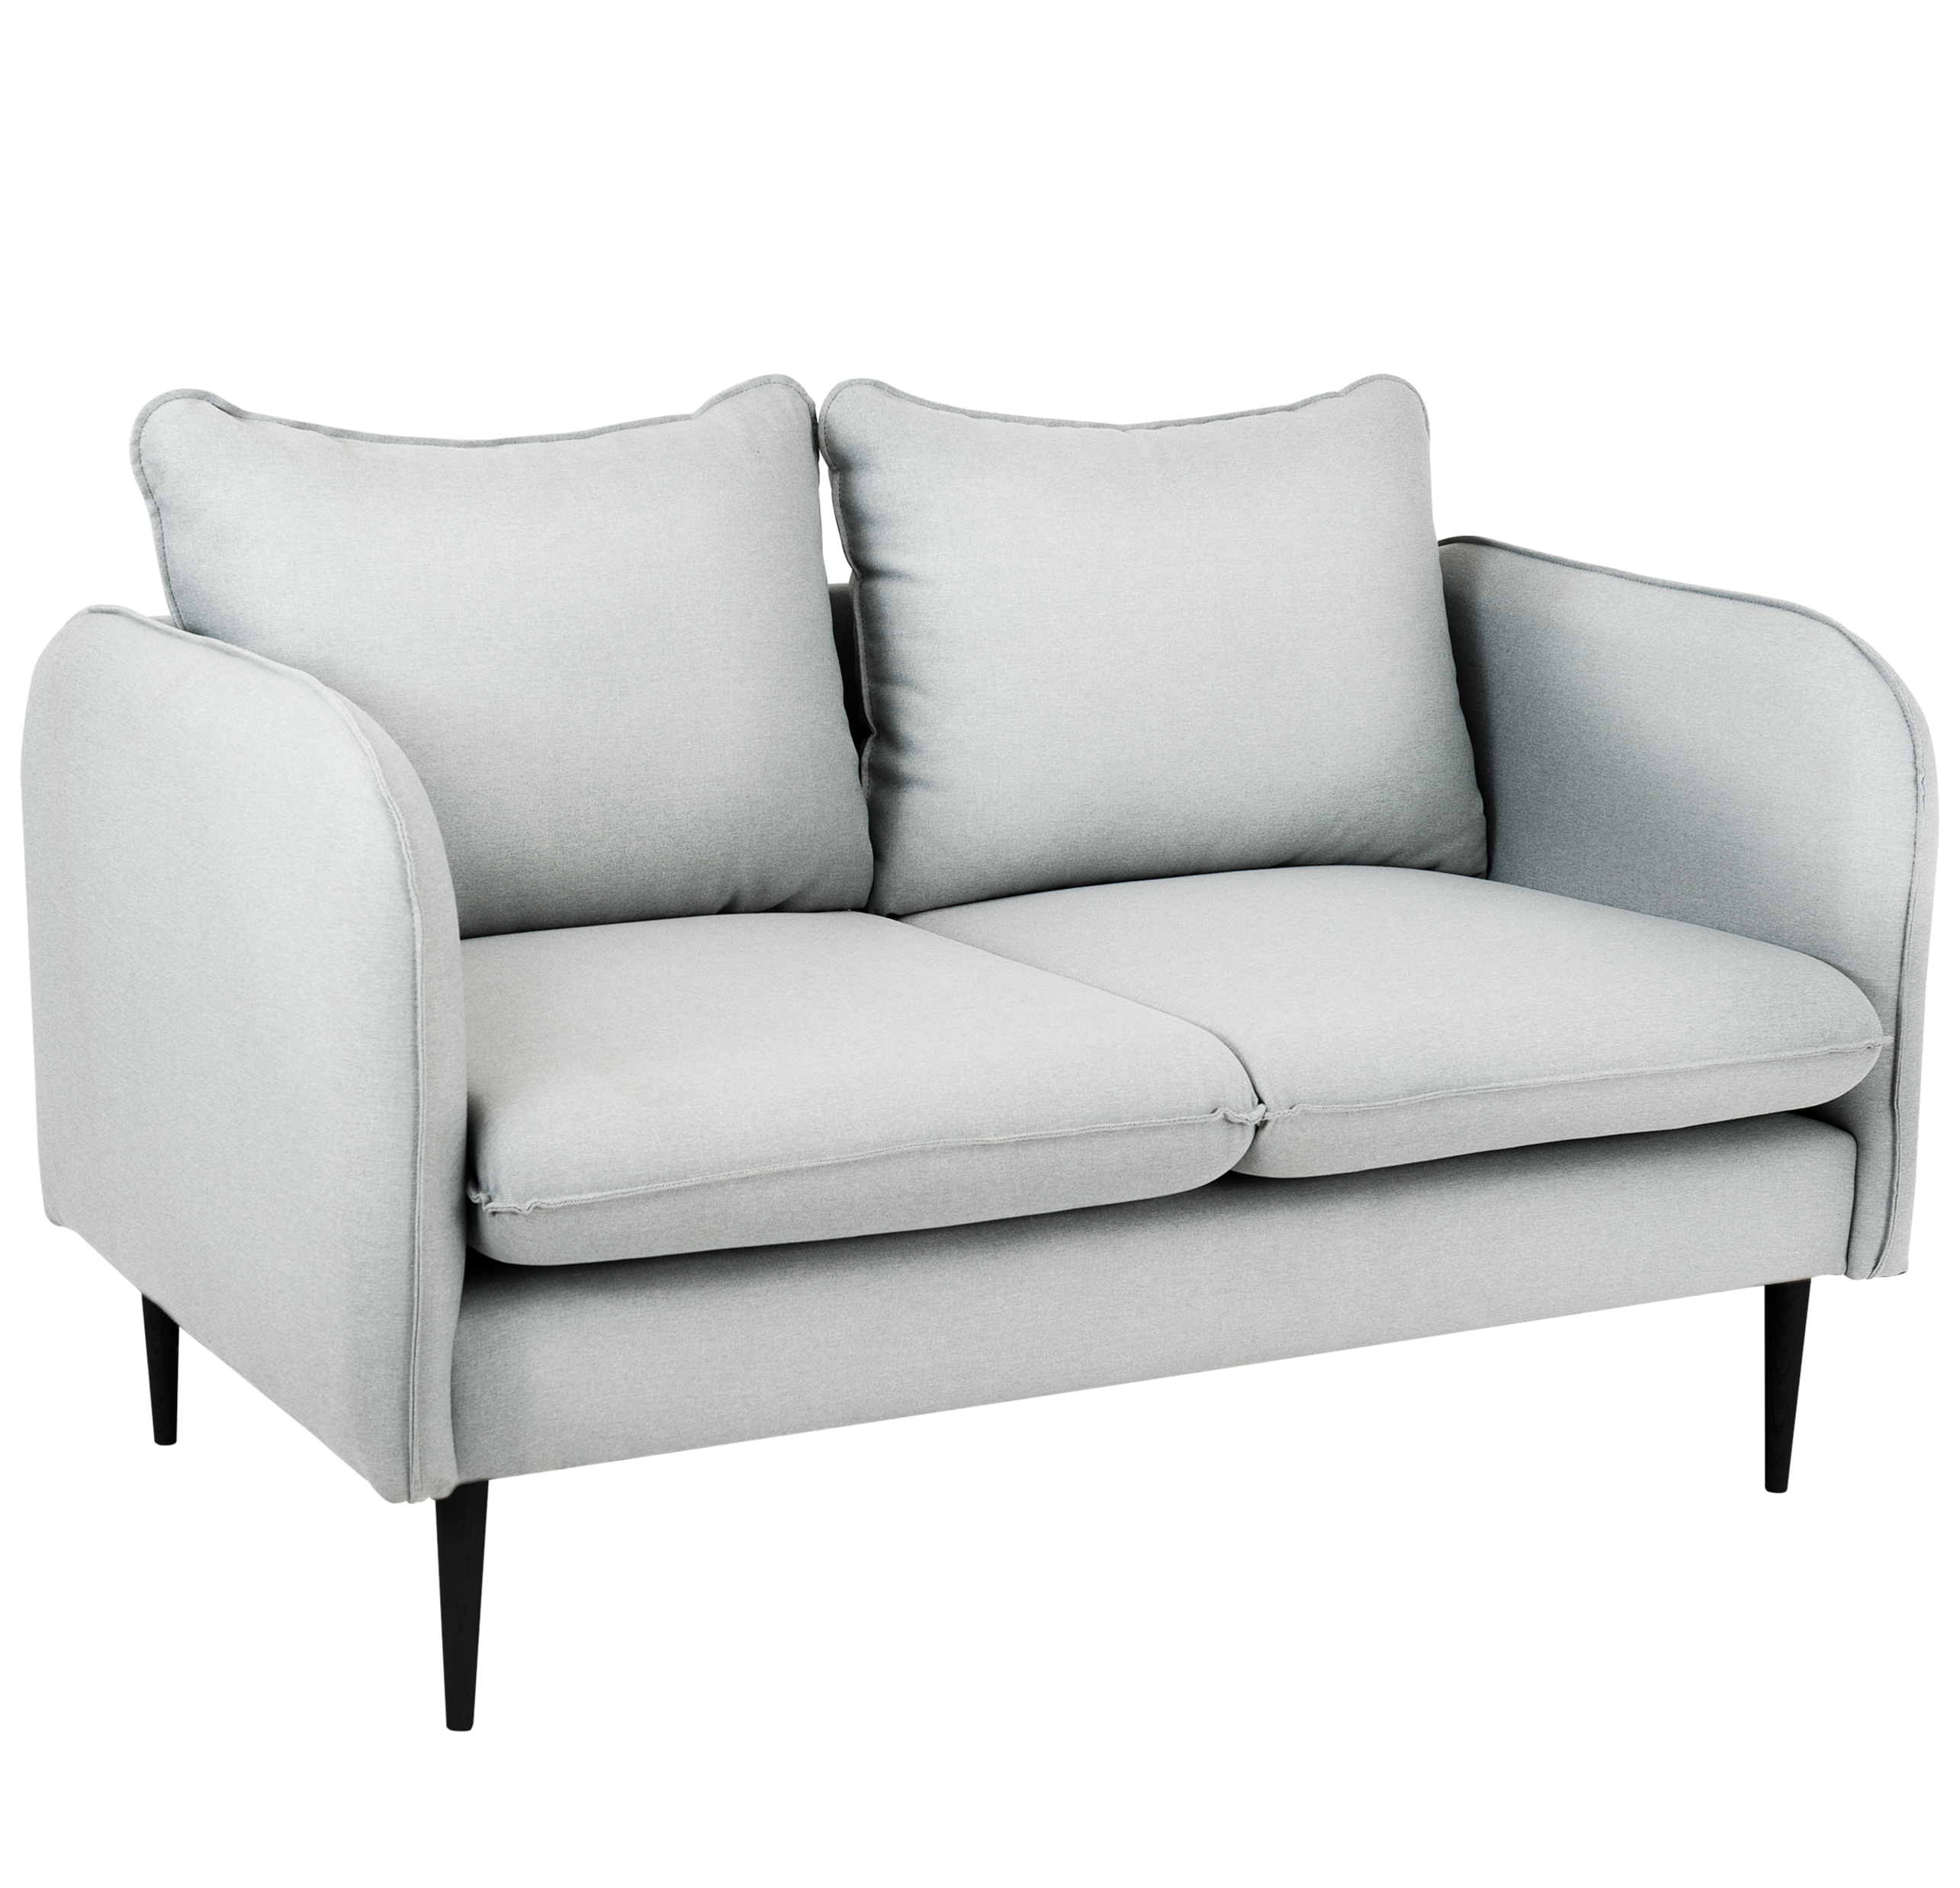 POSH BLACK Sofa 2 Seaters upholstery colour platinum grey